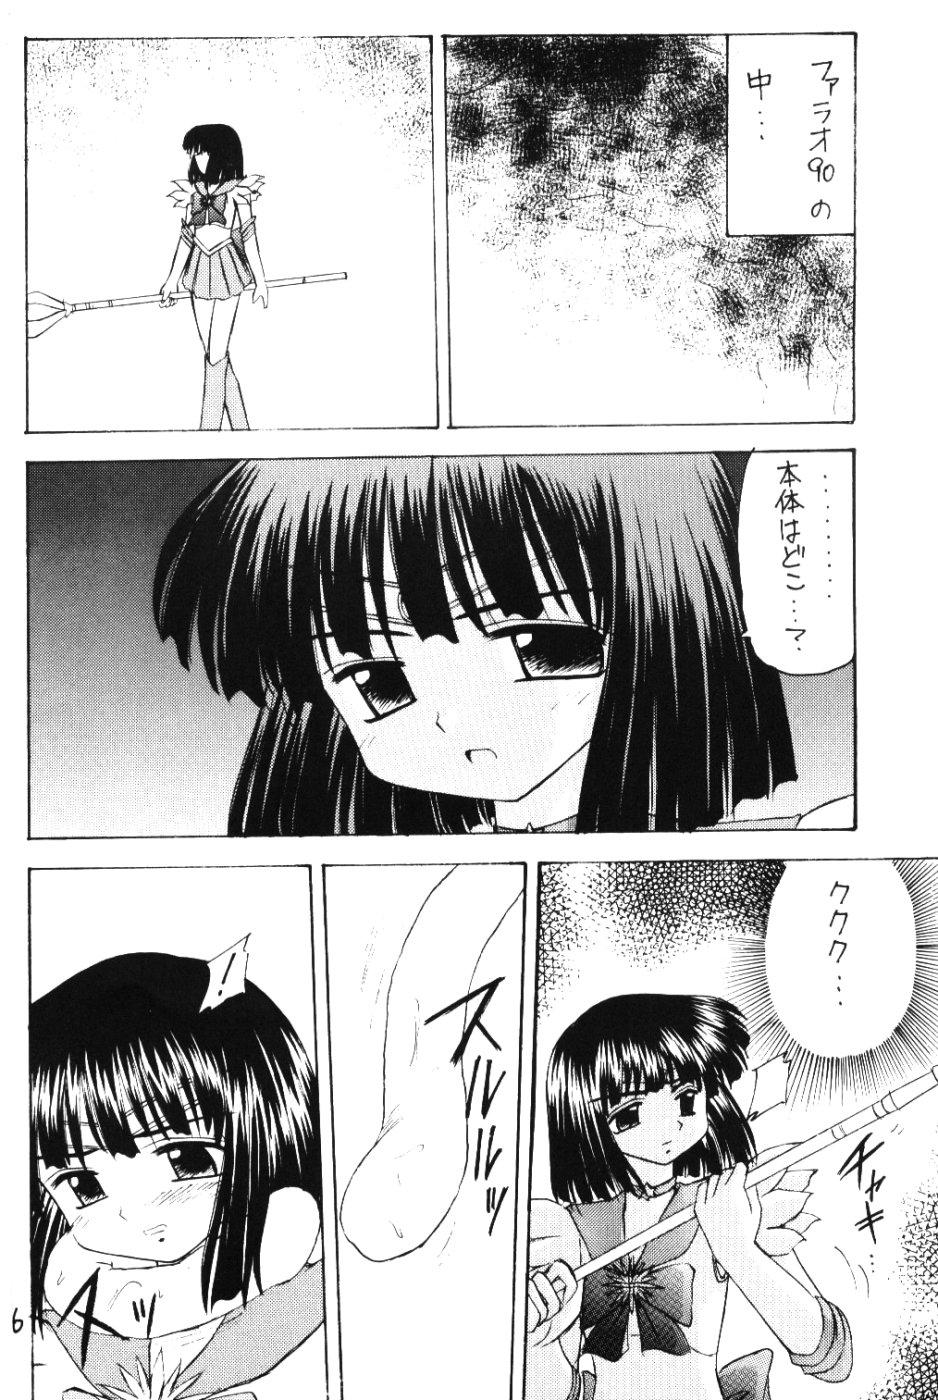 Femdom Pov Hotaru VI - Sailor moon Stranger - Page 5